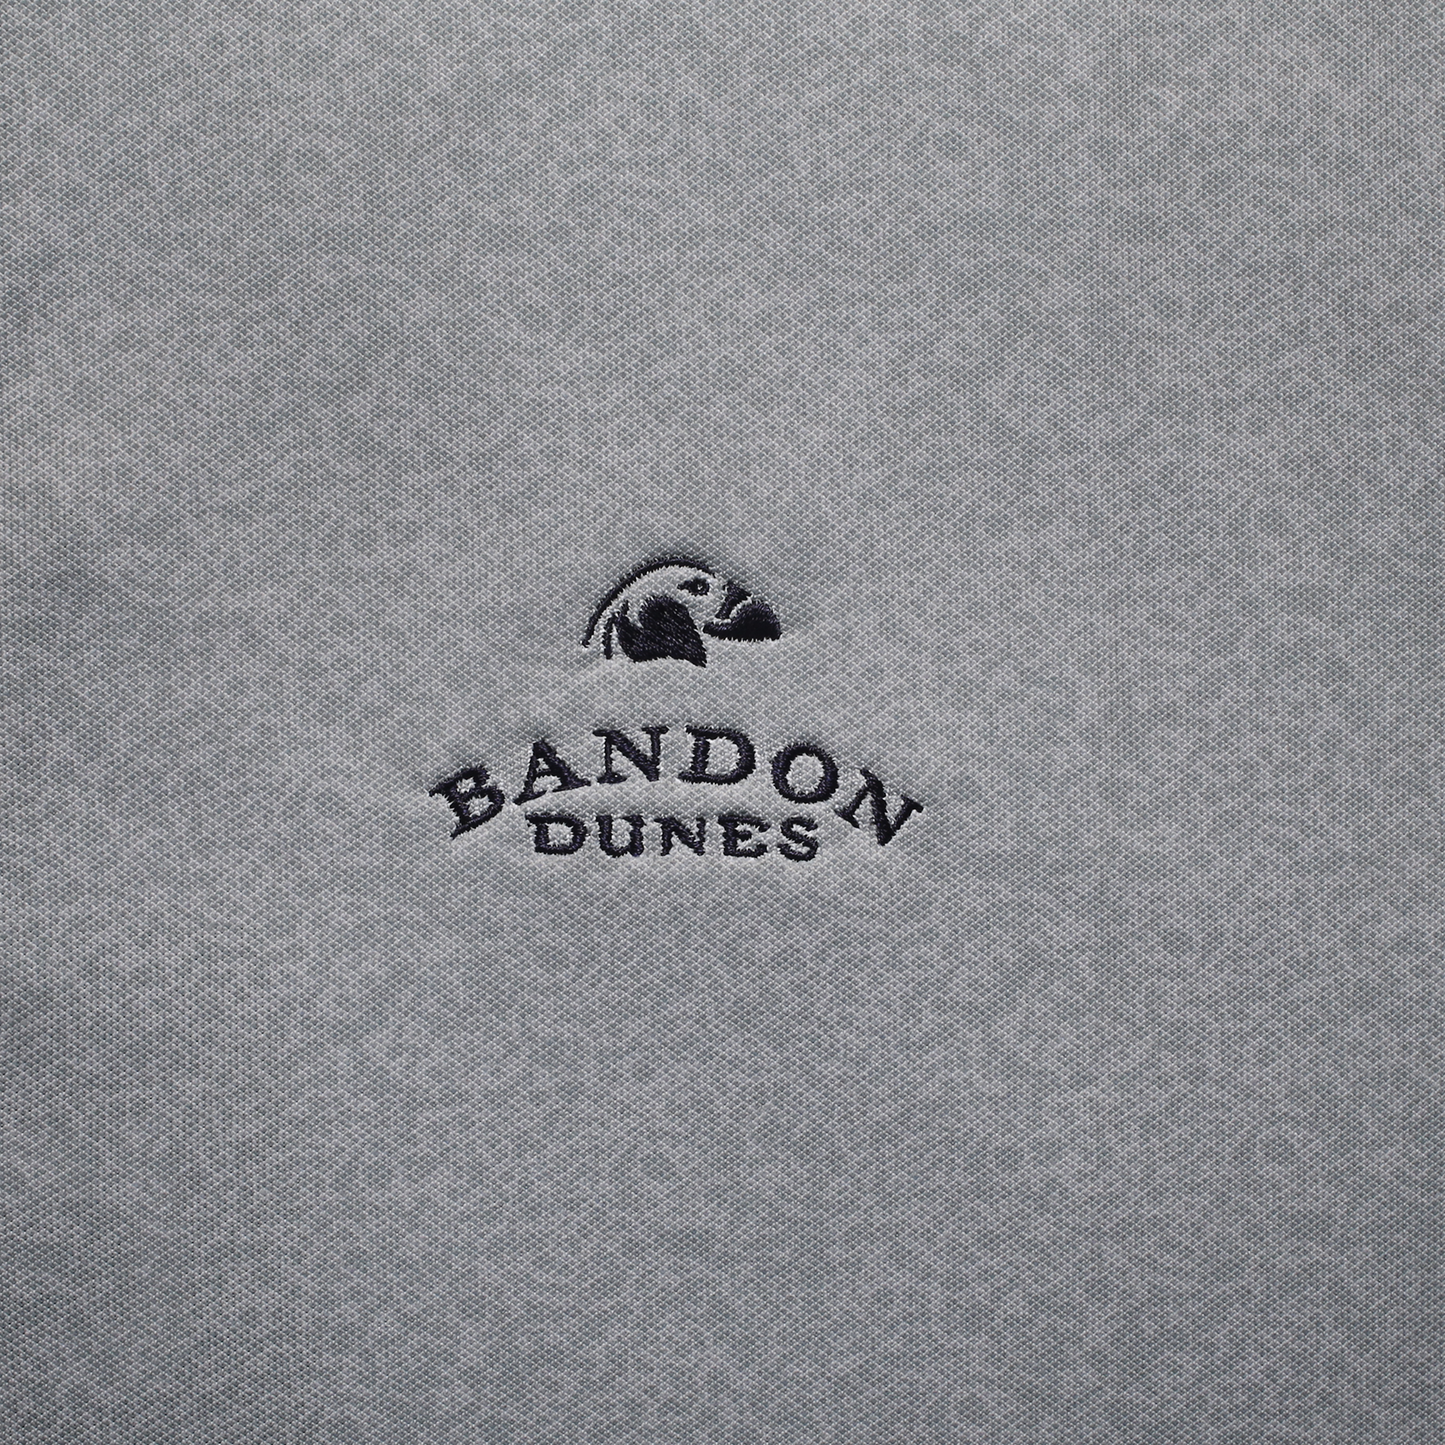 Texture Print - Bandon Dunes